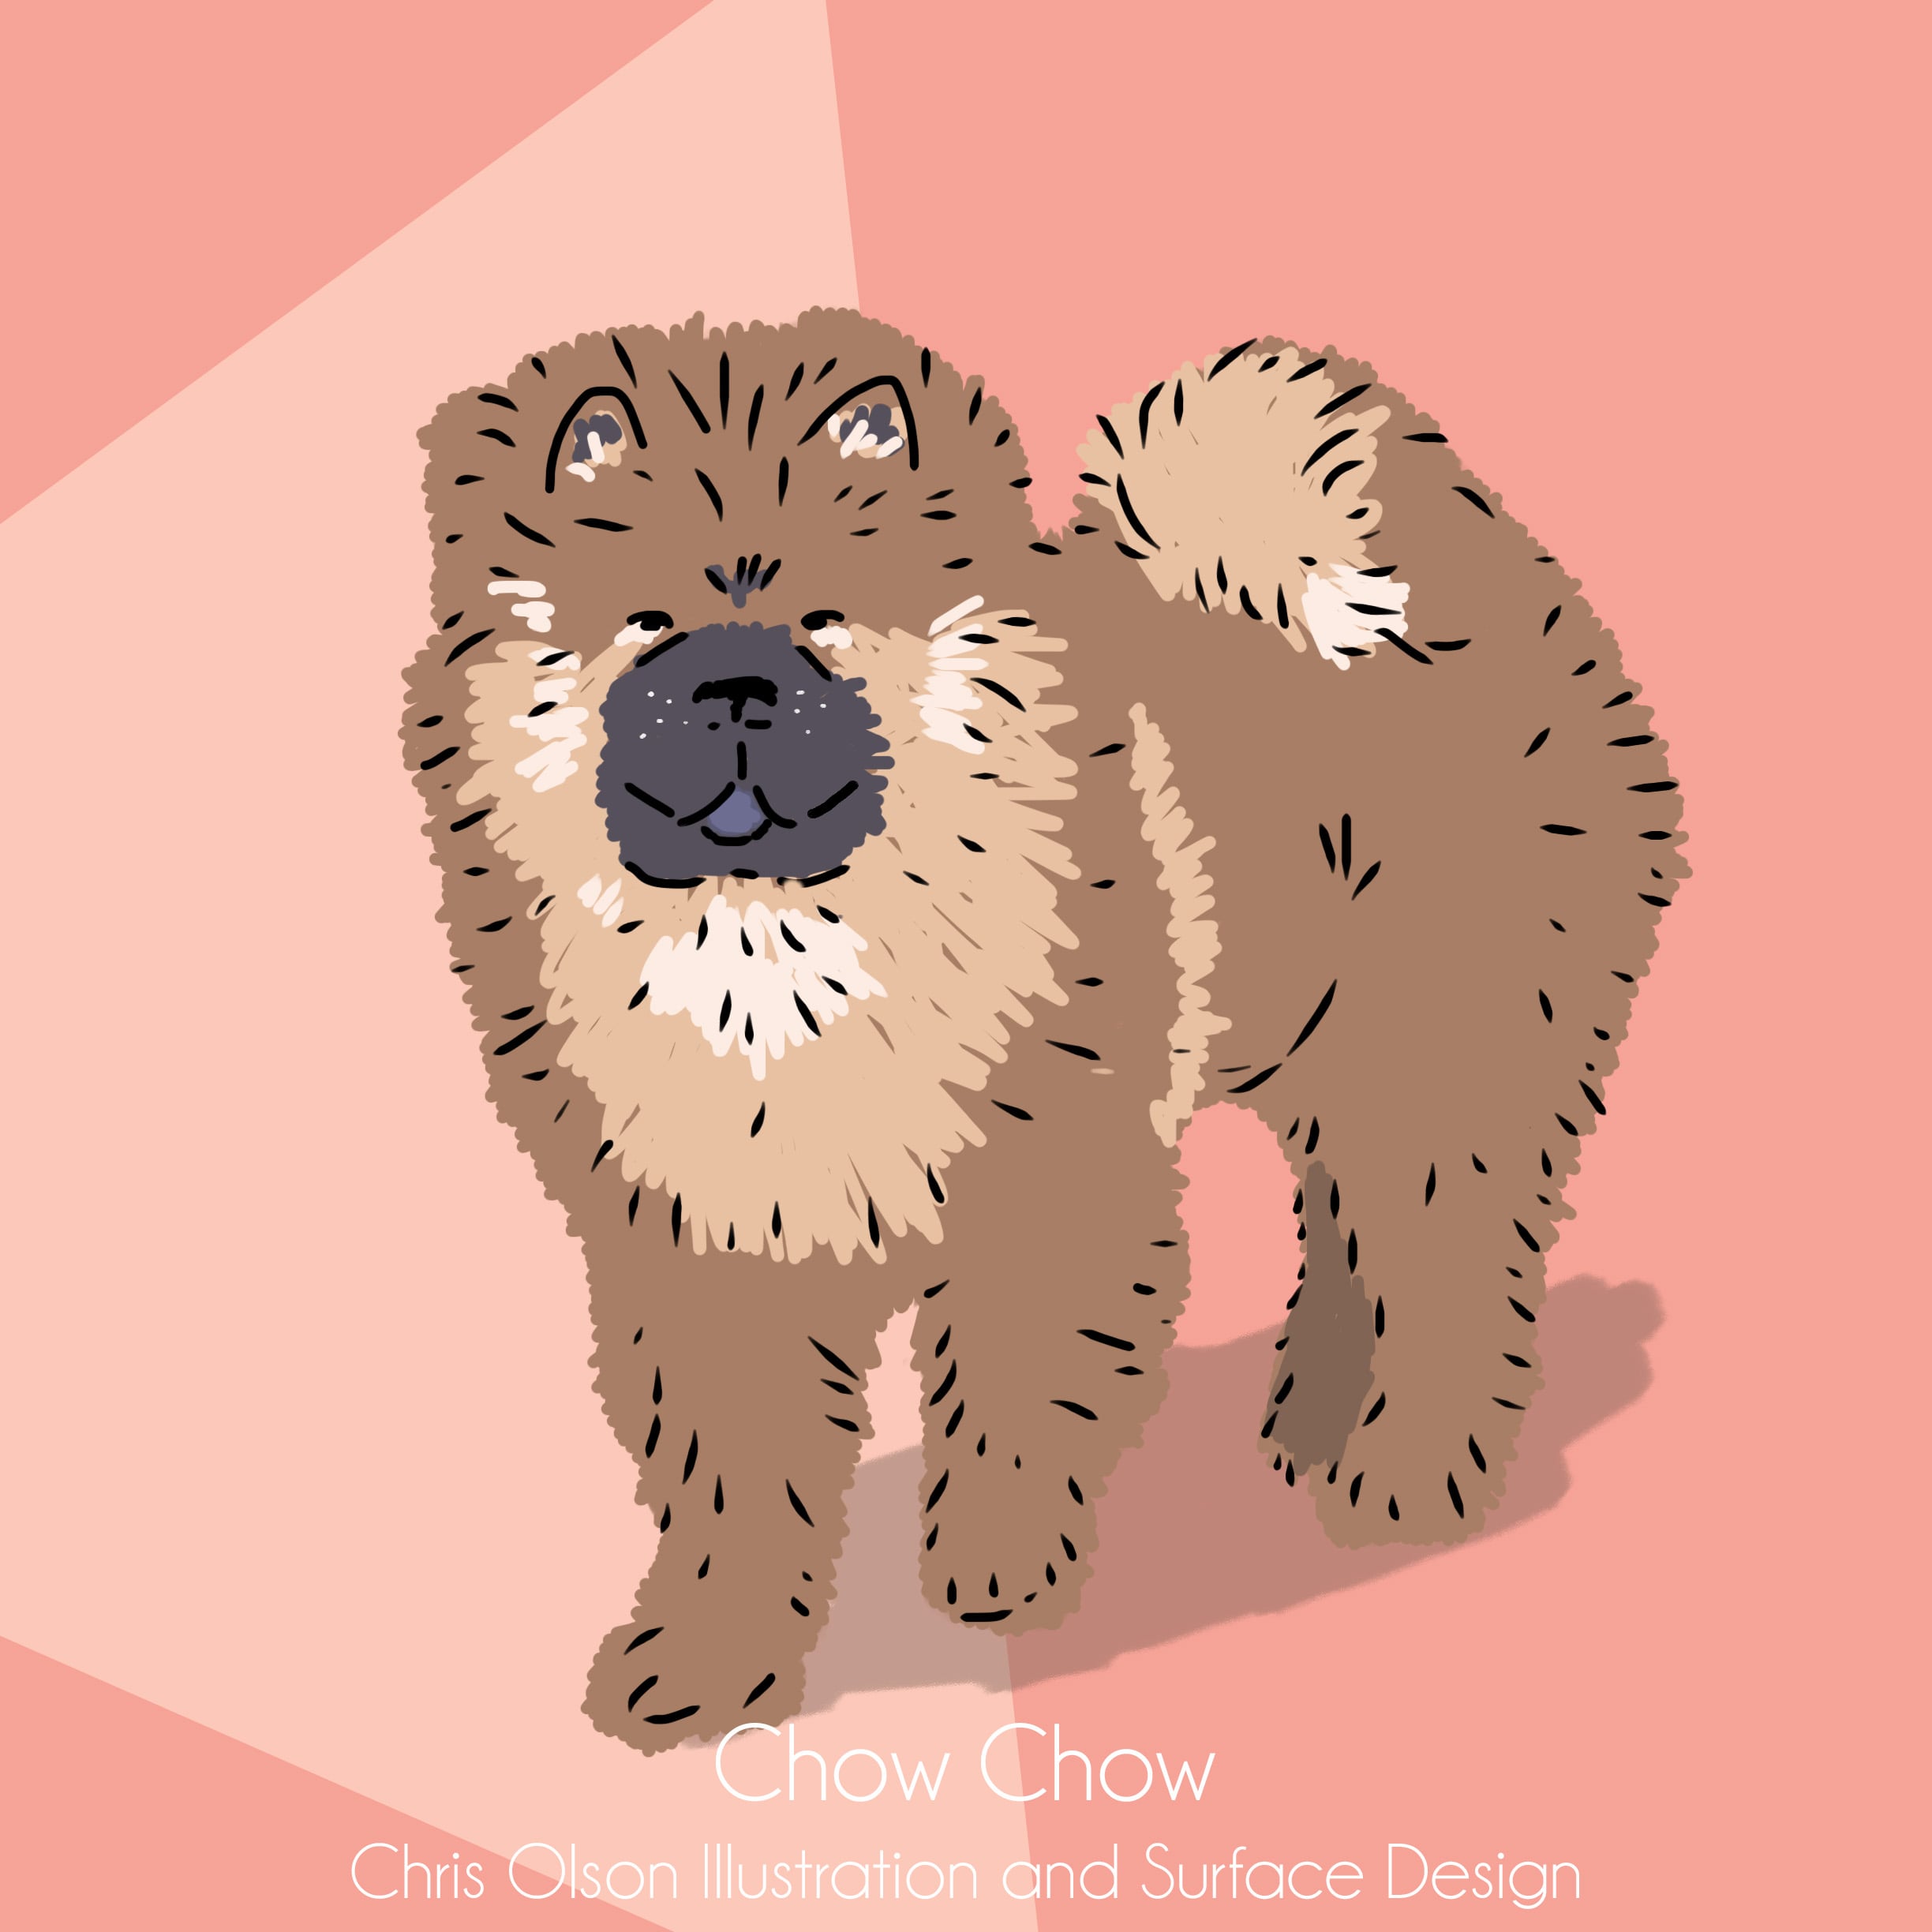 Chow Chow dog illustration by Chris Olson